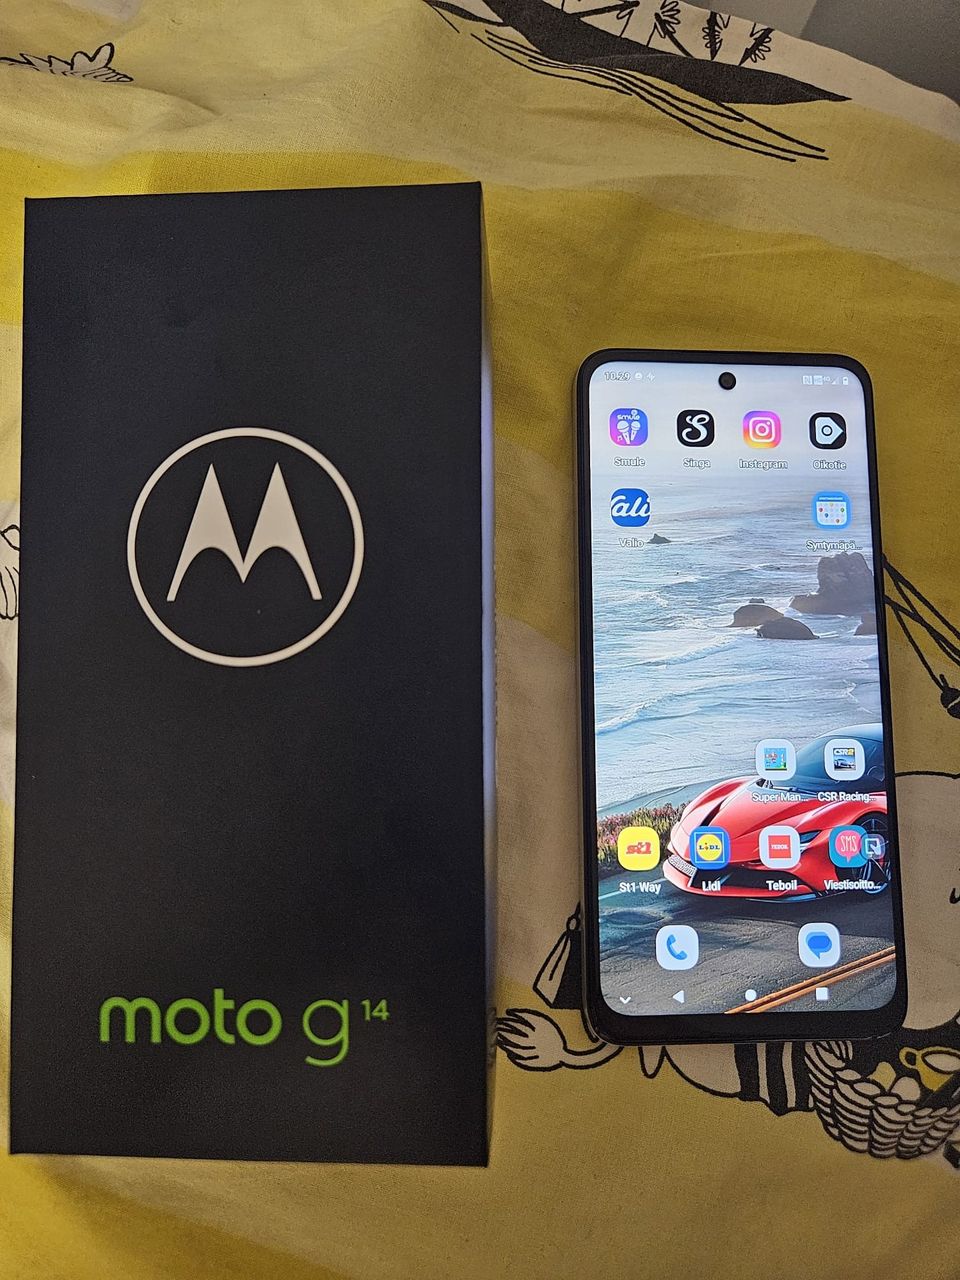 Motorola g14, uusi